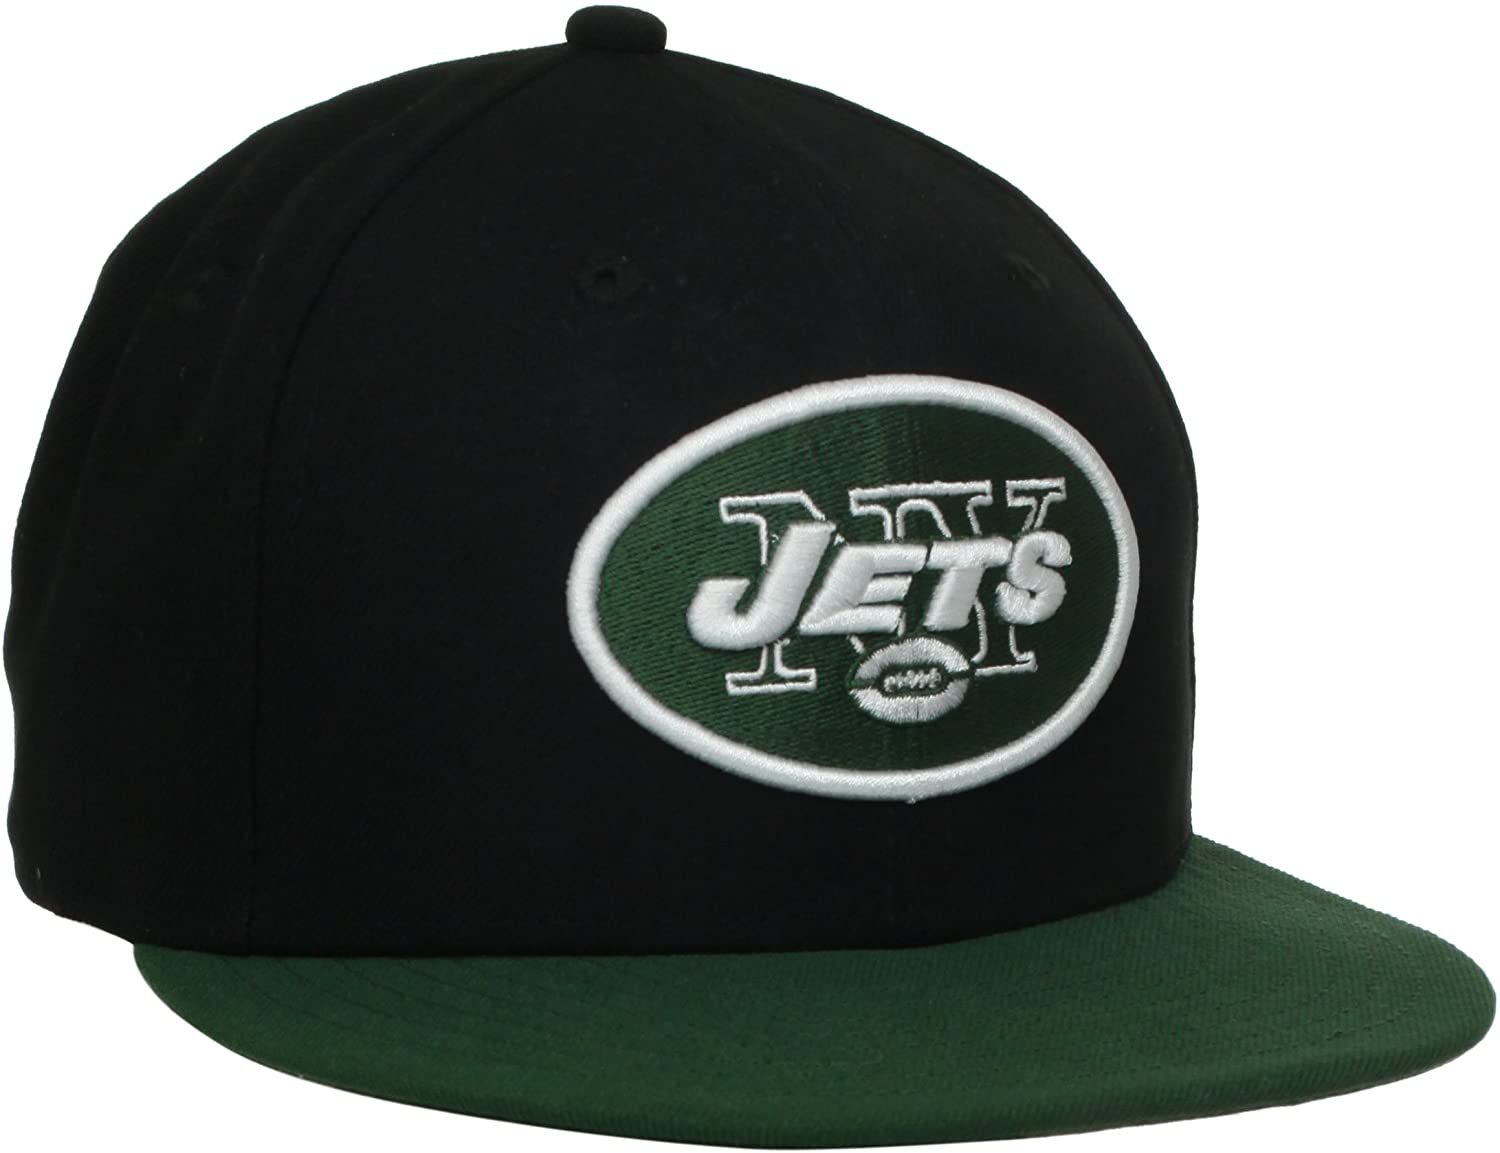 New Era 59Fifty NFL New York Jets Black/Green cap